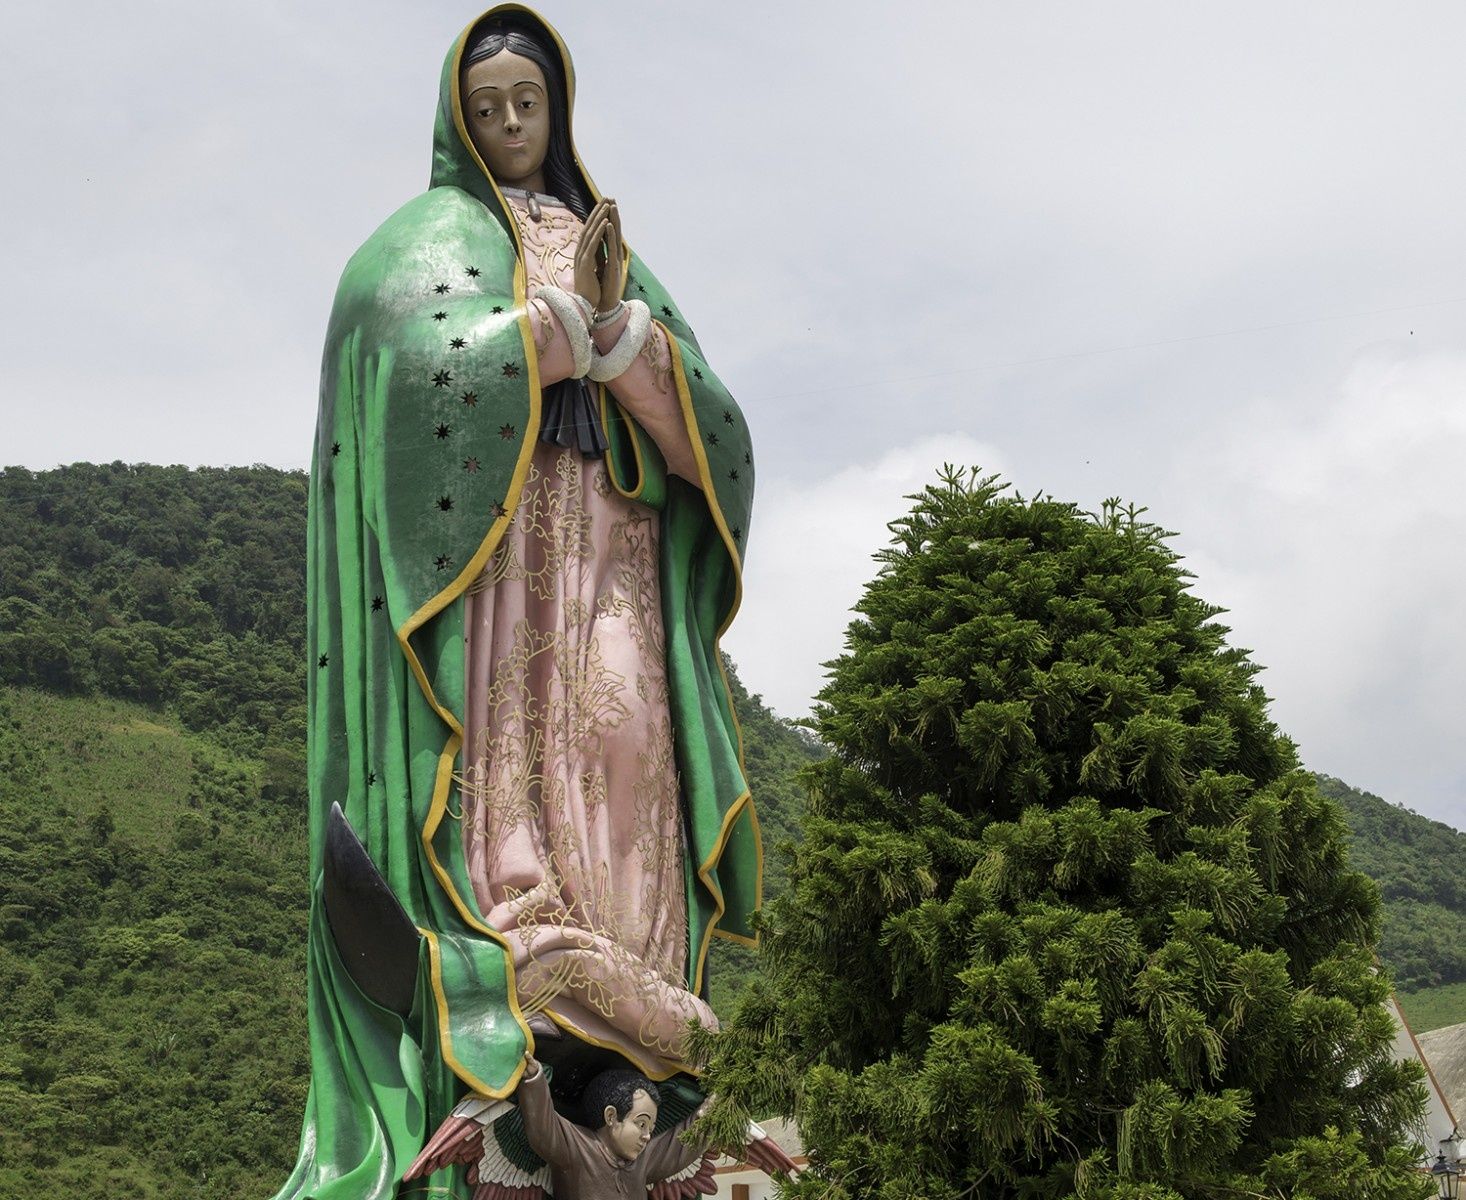 [Download 26+] Imagen Muy Bonita De La Virgen De Guadalupe